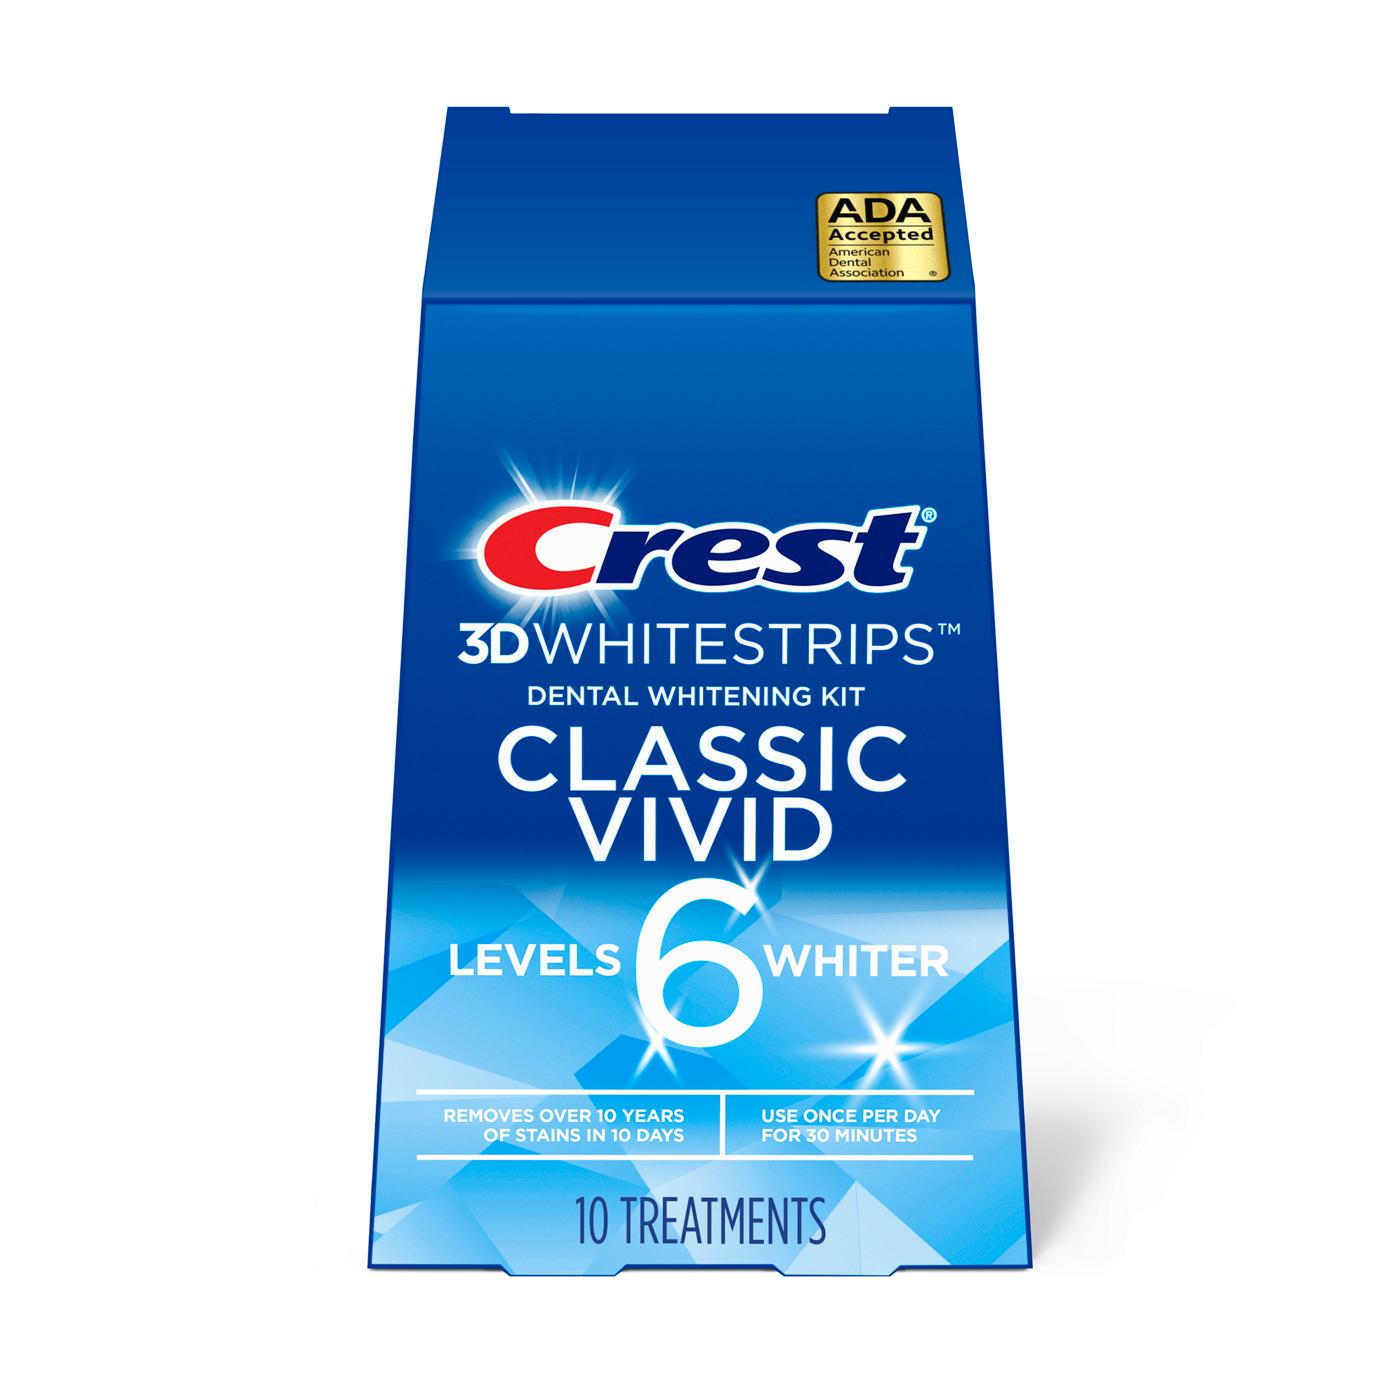 Crest 3DWhitestrips Dental Whitening Kit - Classic Vivid; image 1 of 7